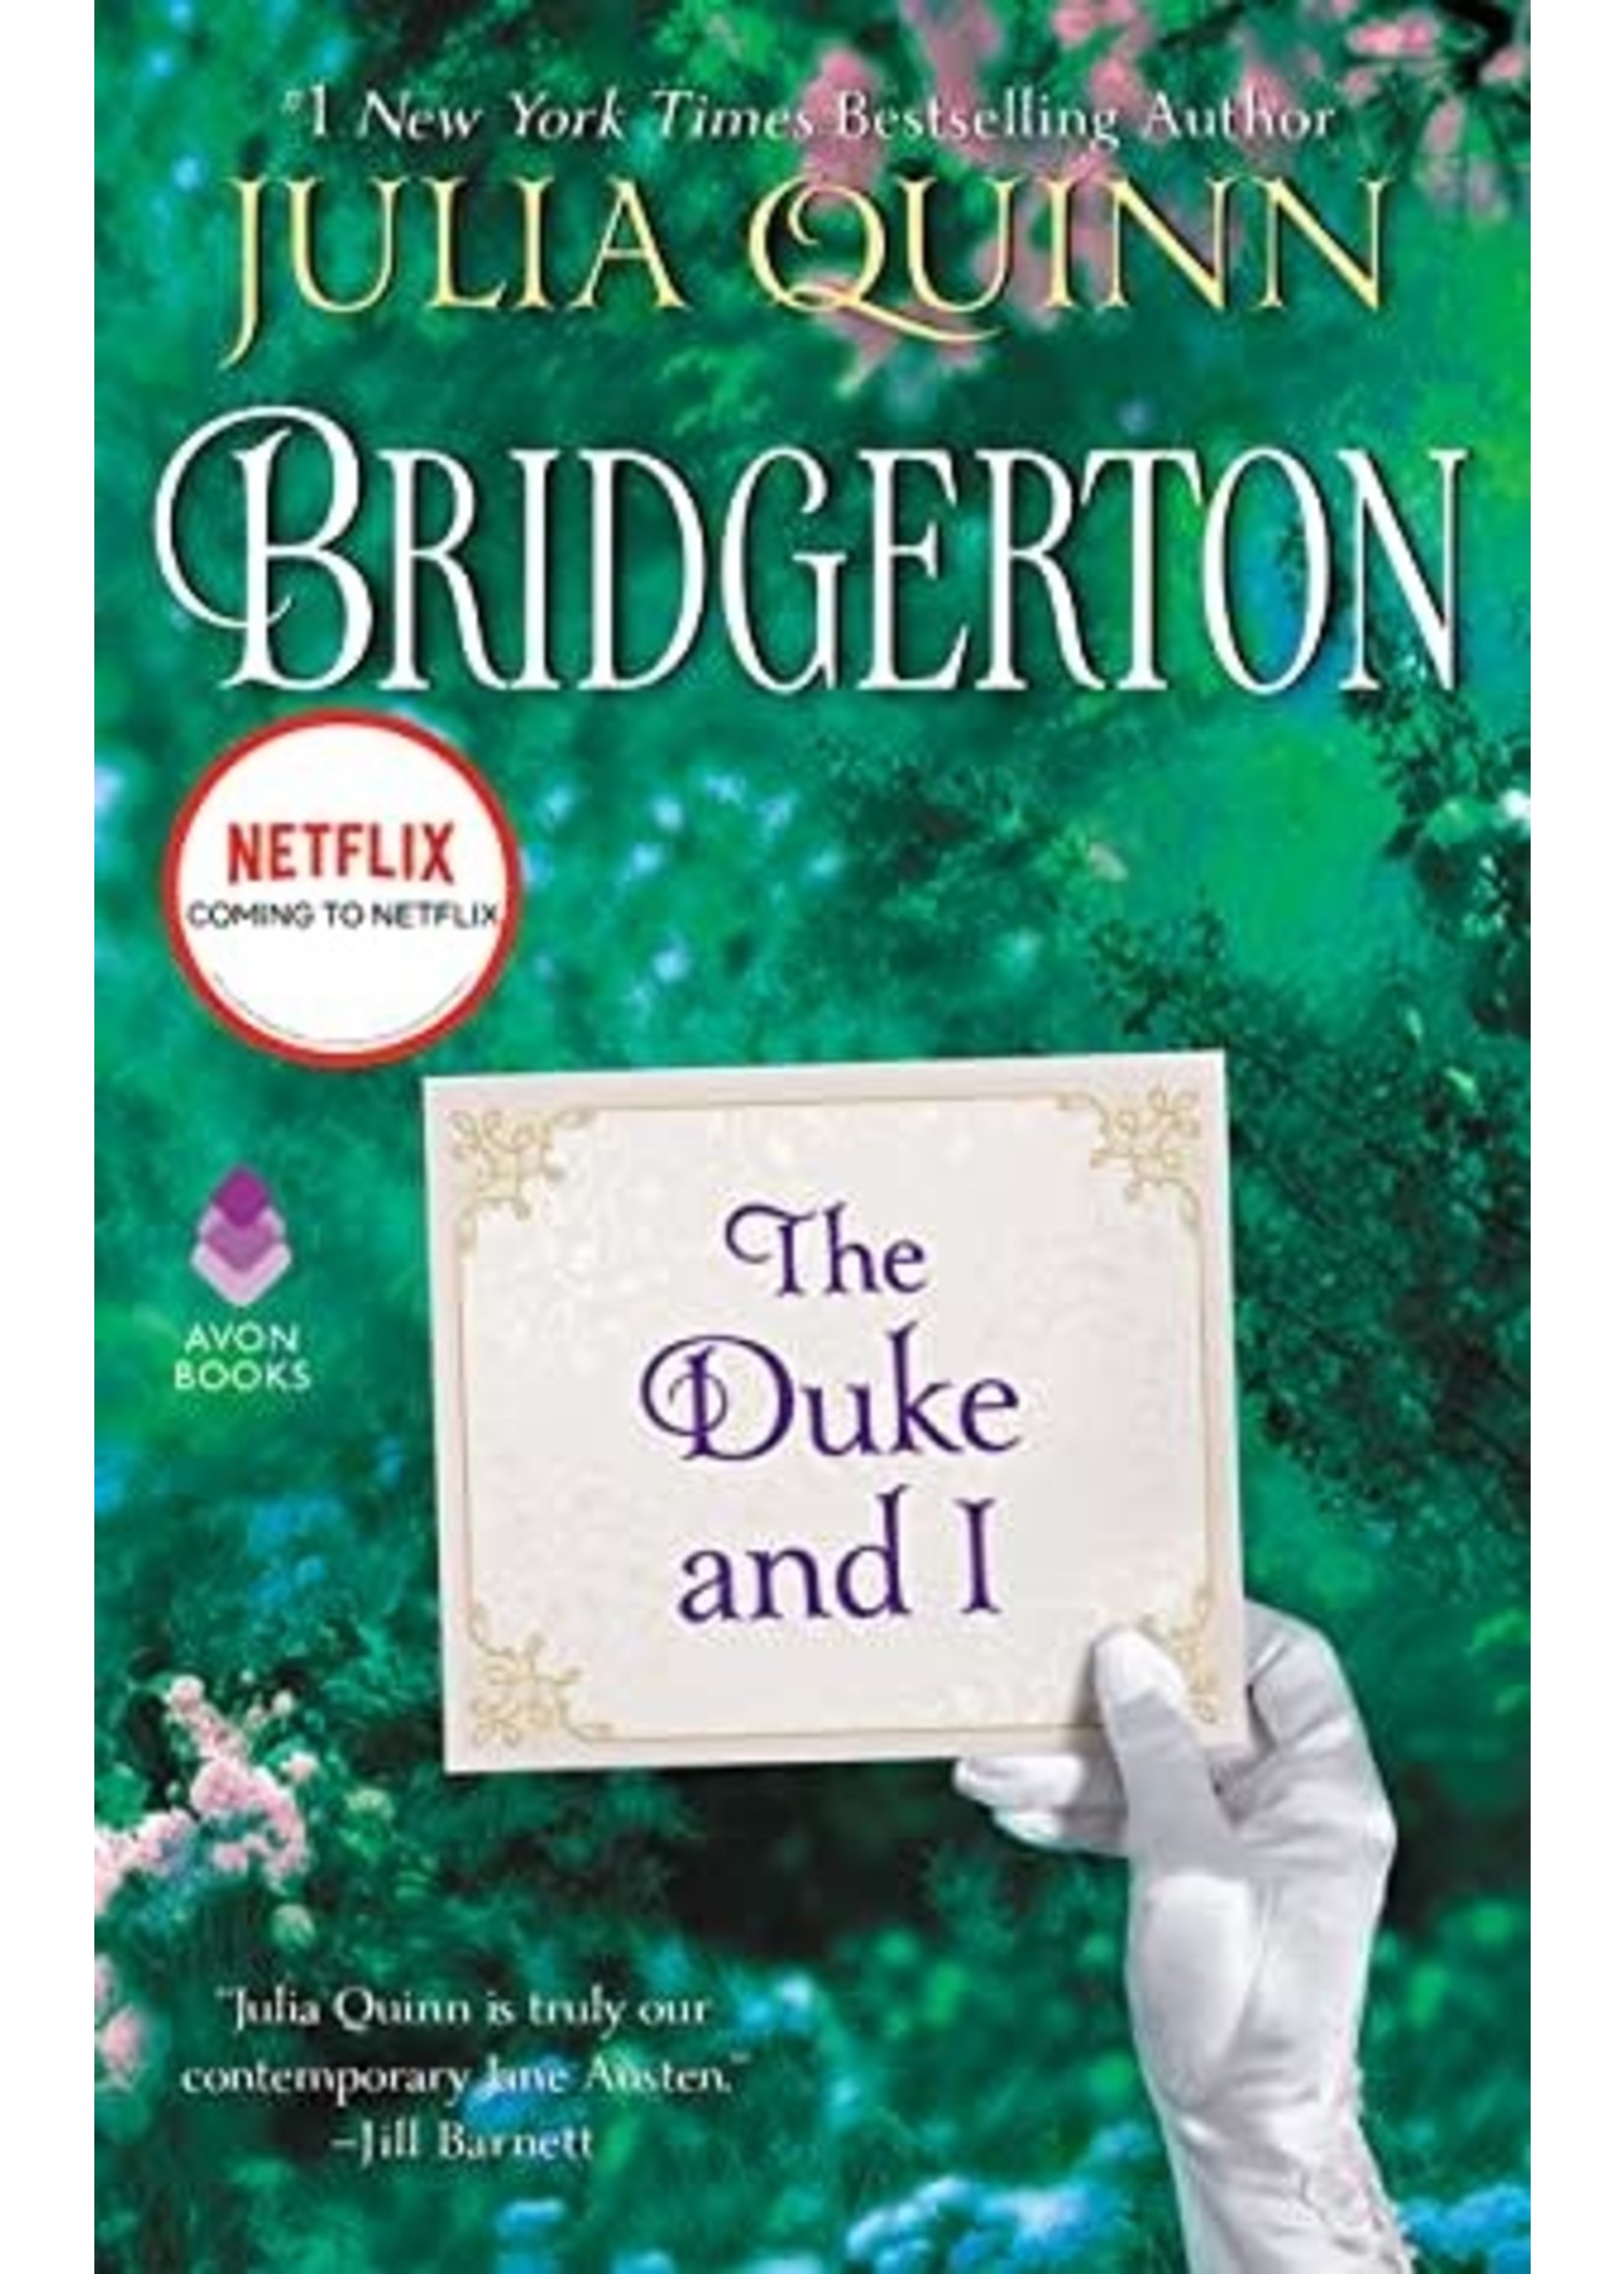 The Duke and I (Bridgertons #1) by Julia Quinn